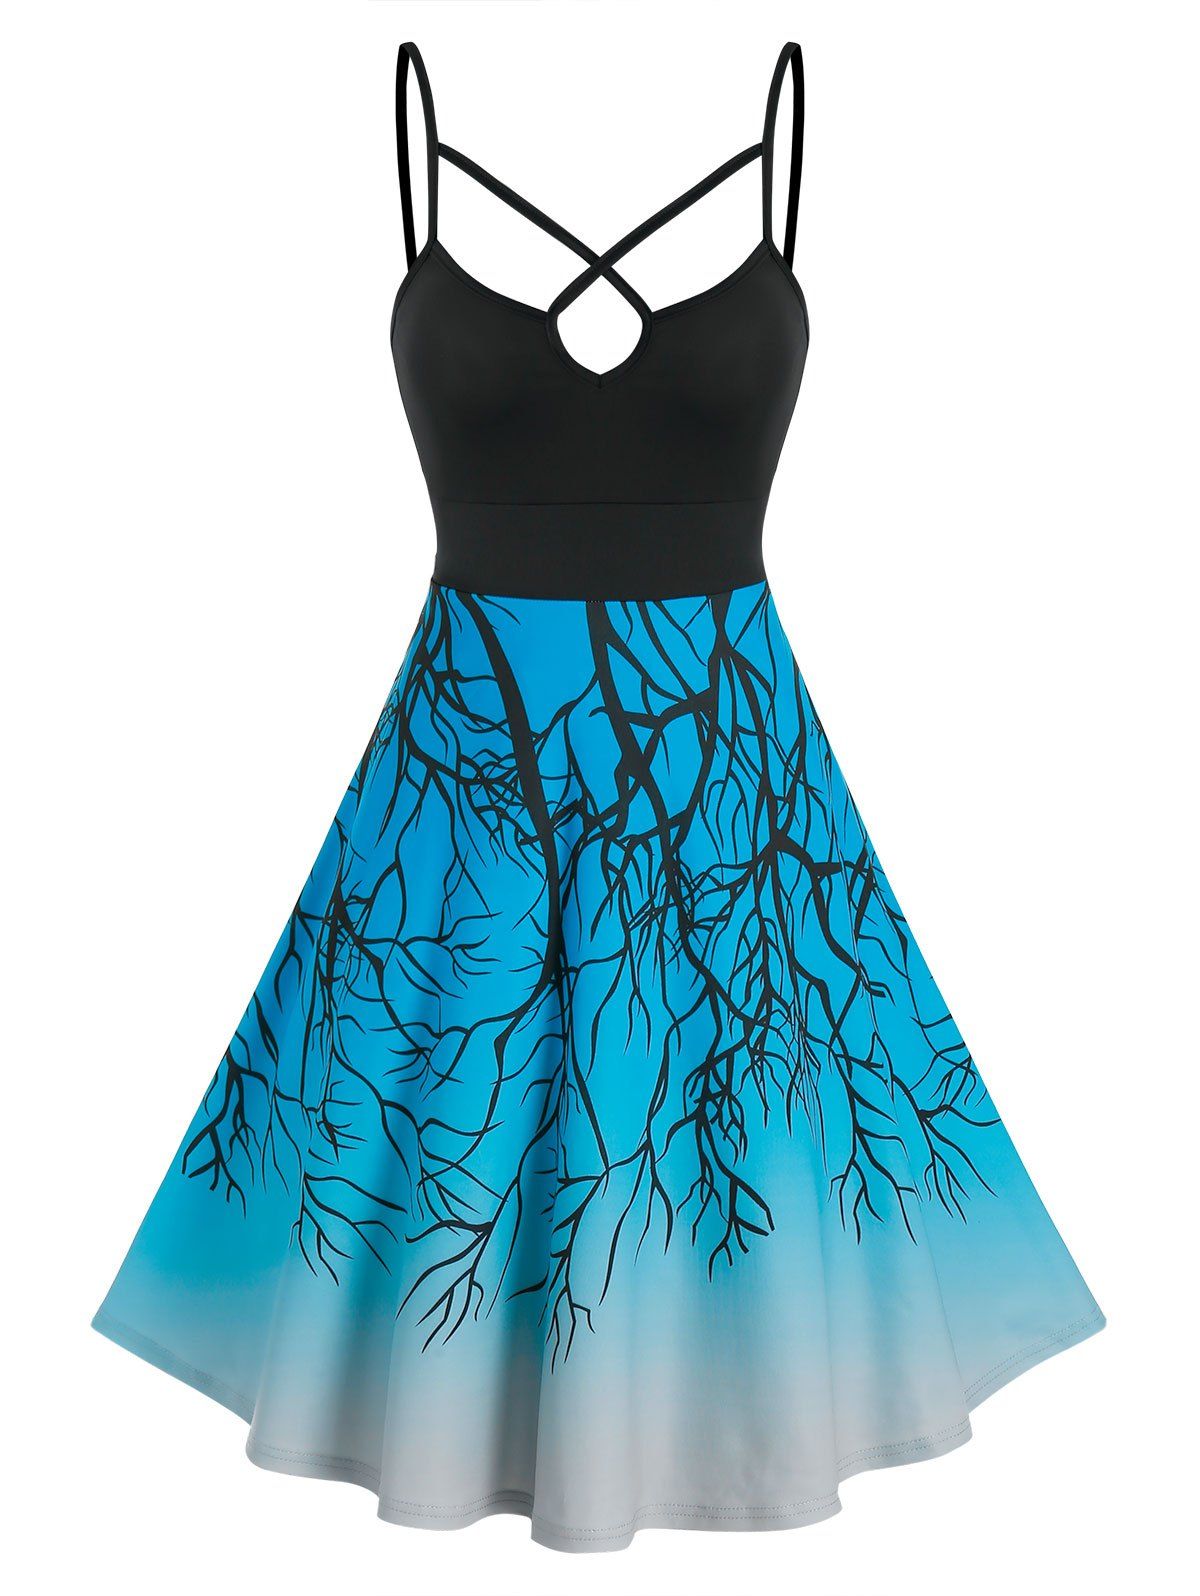 Branch Pattern Colorblock A Line Dress - DEEP BLUE M